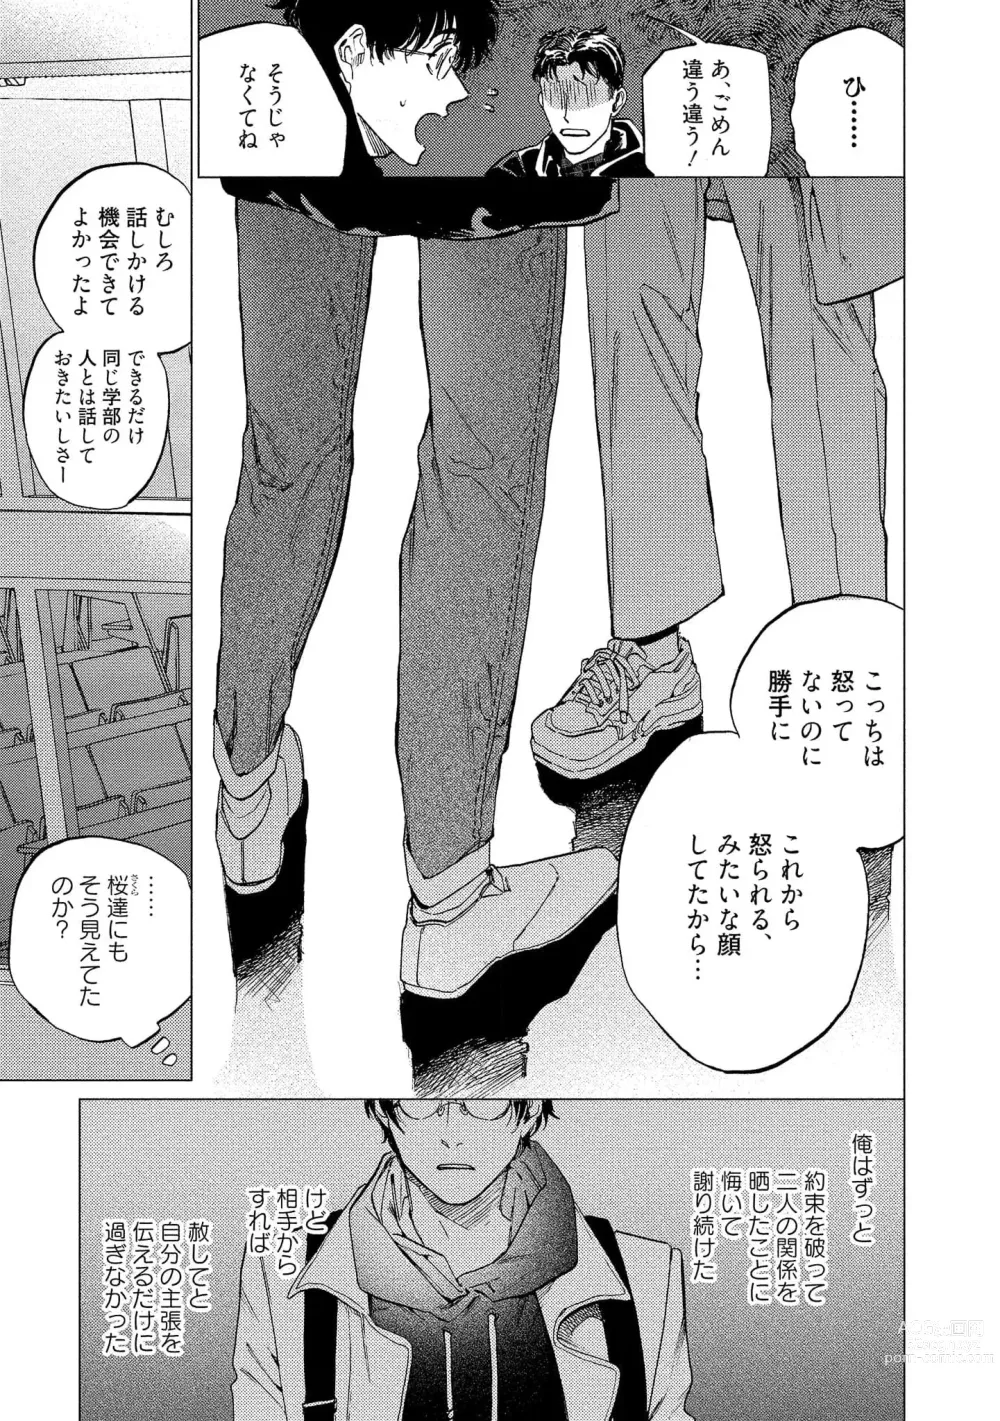 Page 151 of manga Fukushuu ga Tokenai